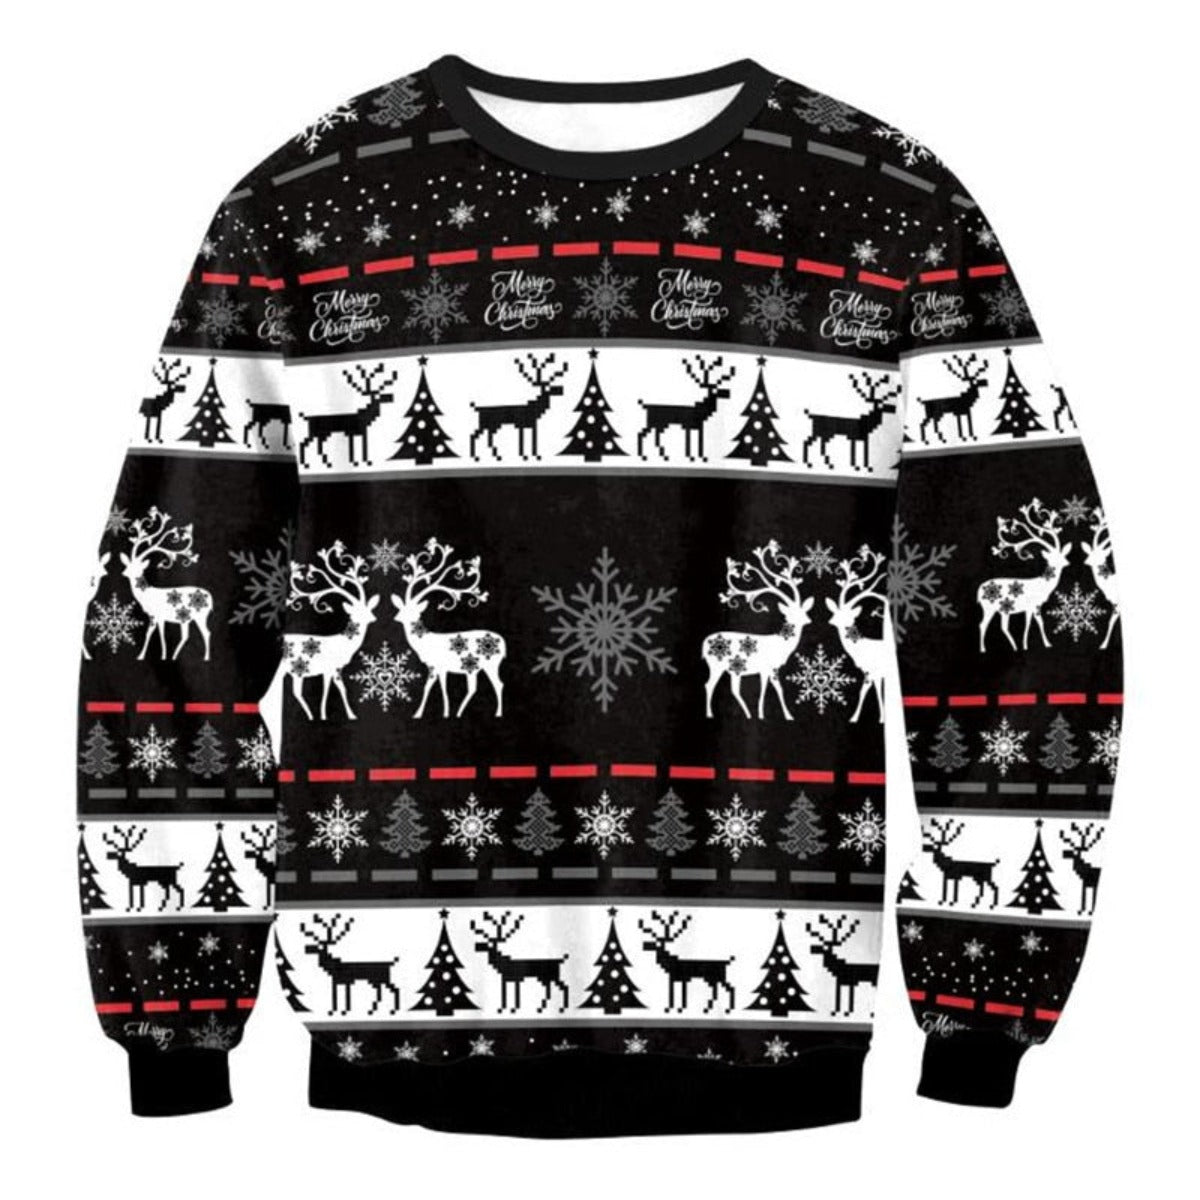 Reindeer, Christmas Tree, Snowflakes Ugly Christmas Sweater